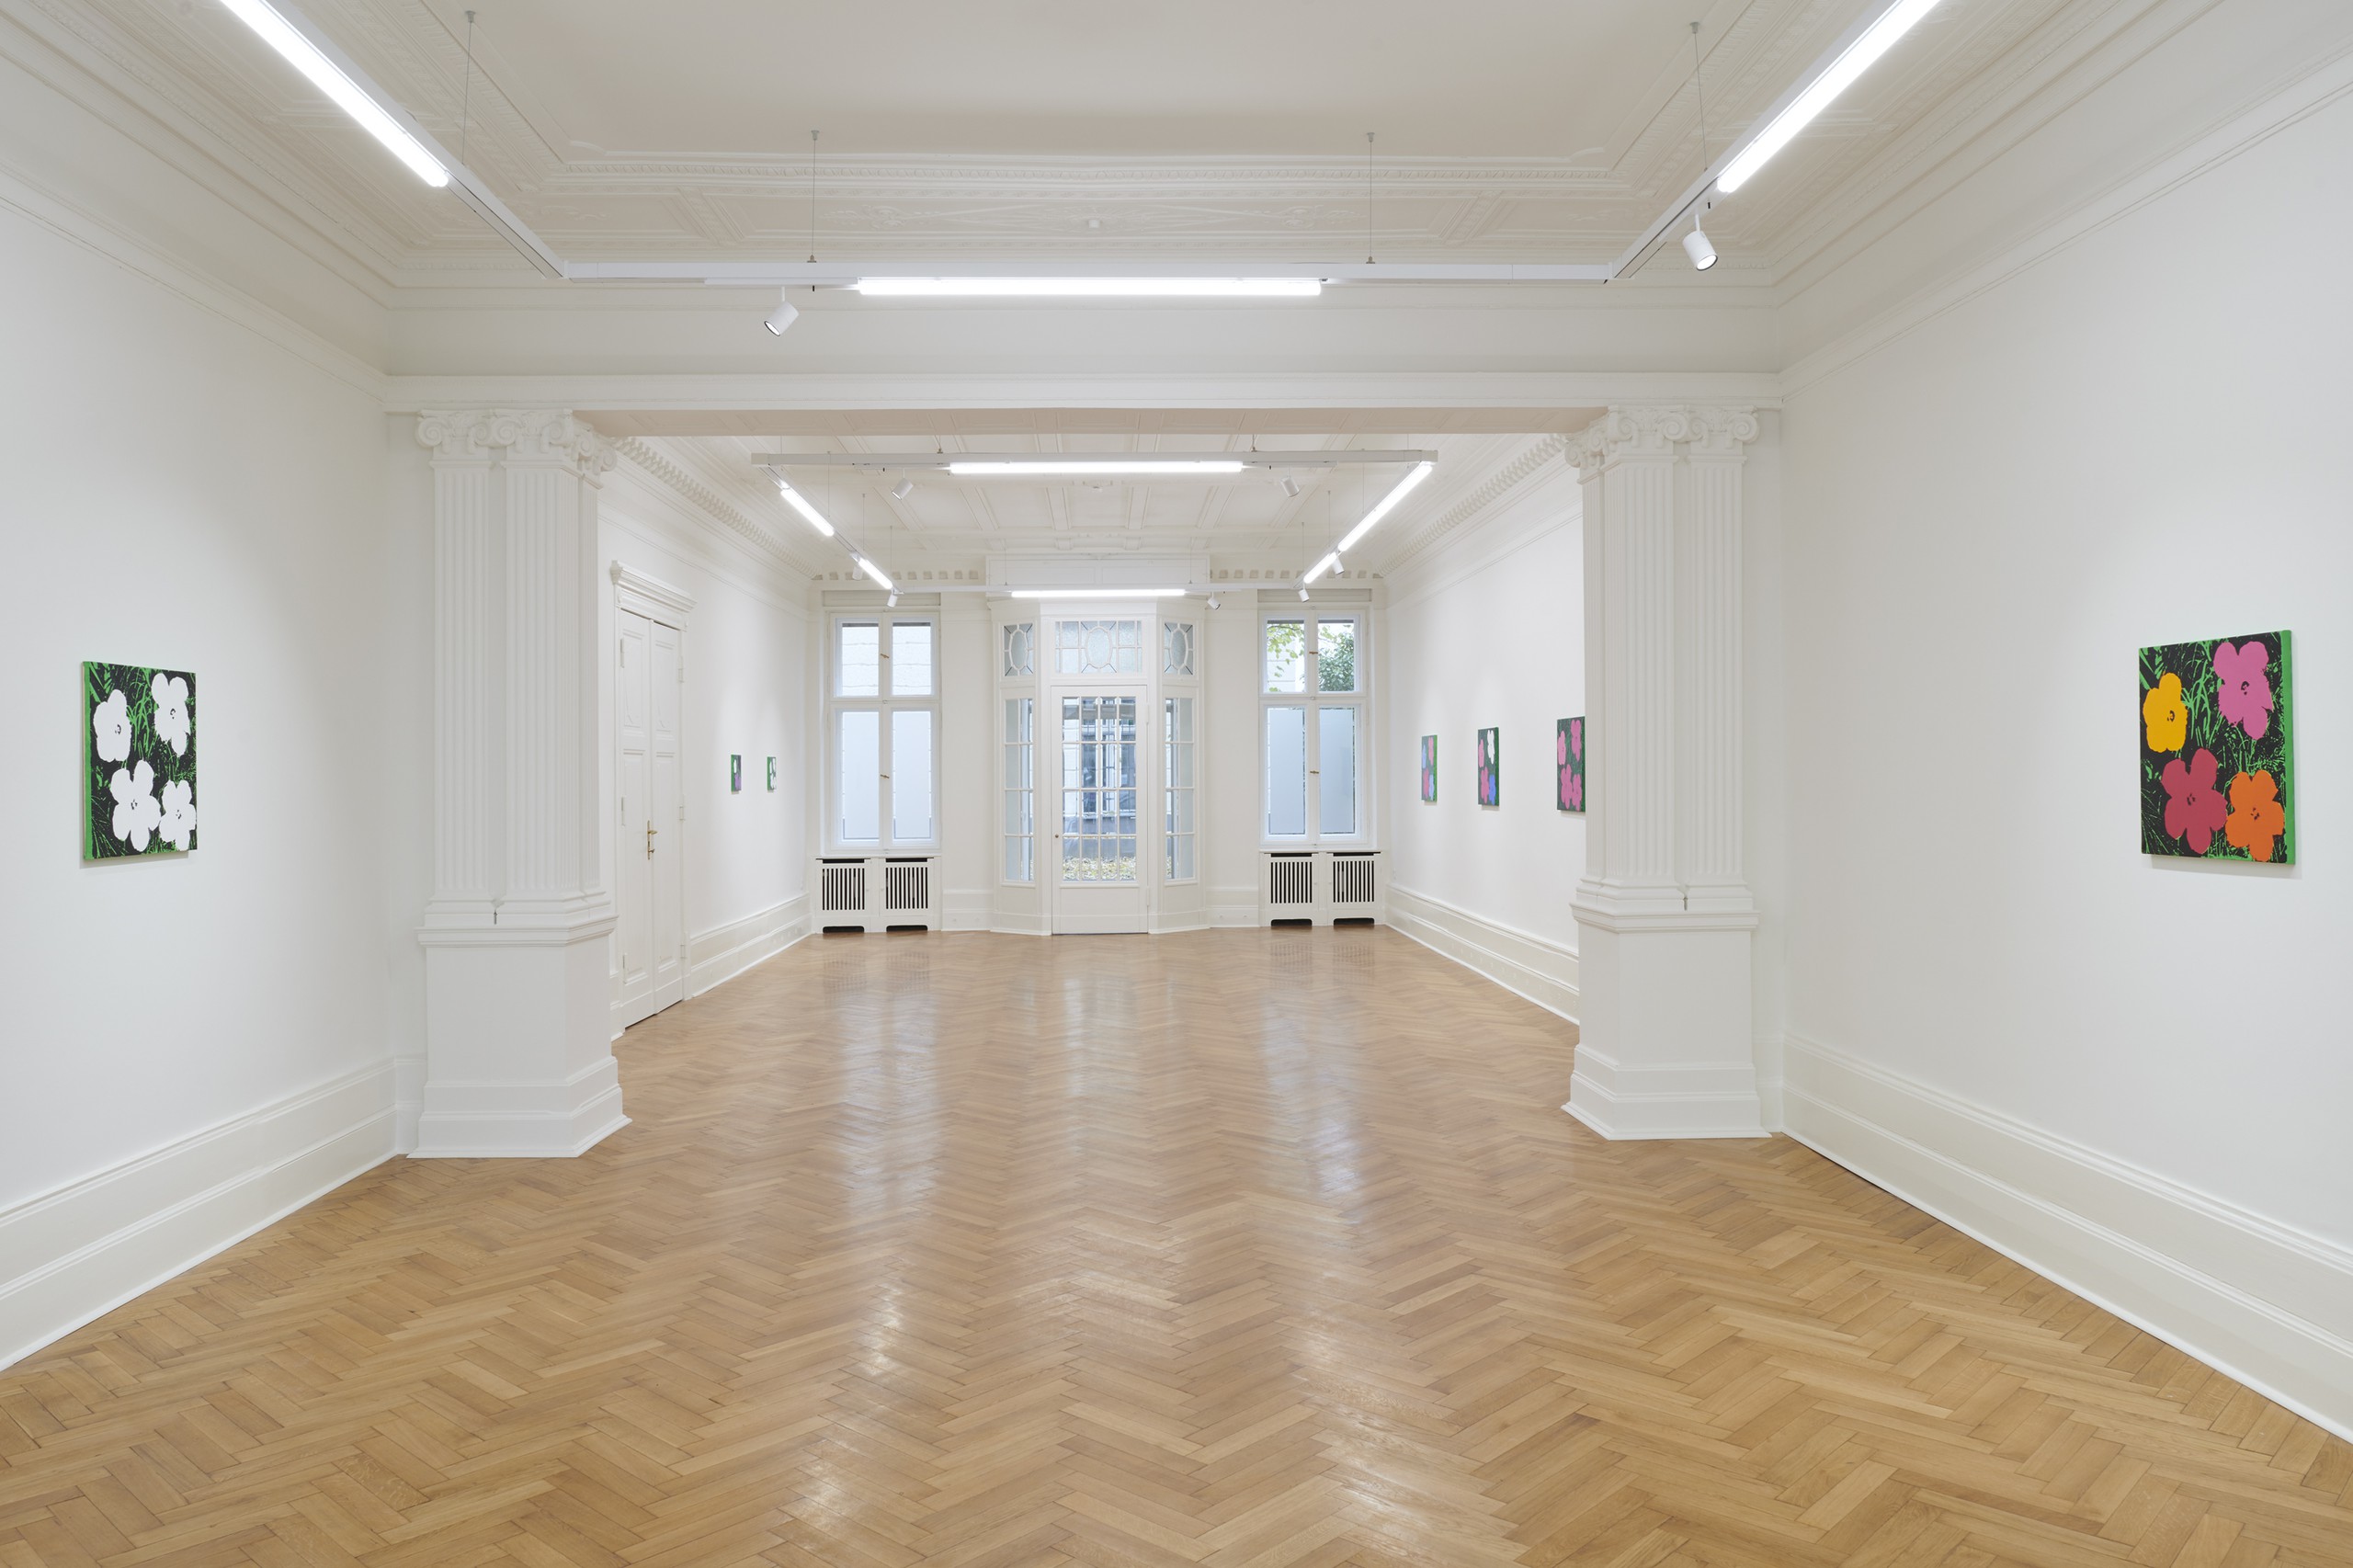 Installation view, Sturtevant, Société, Berlin, 2020